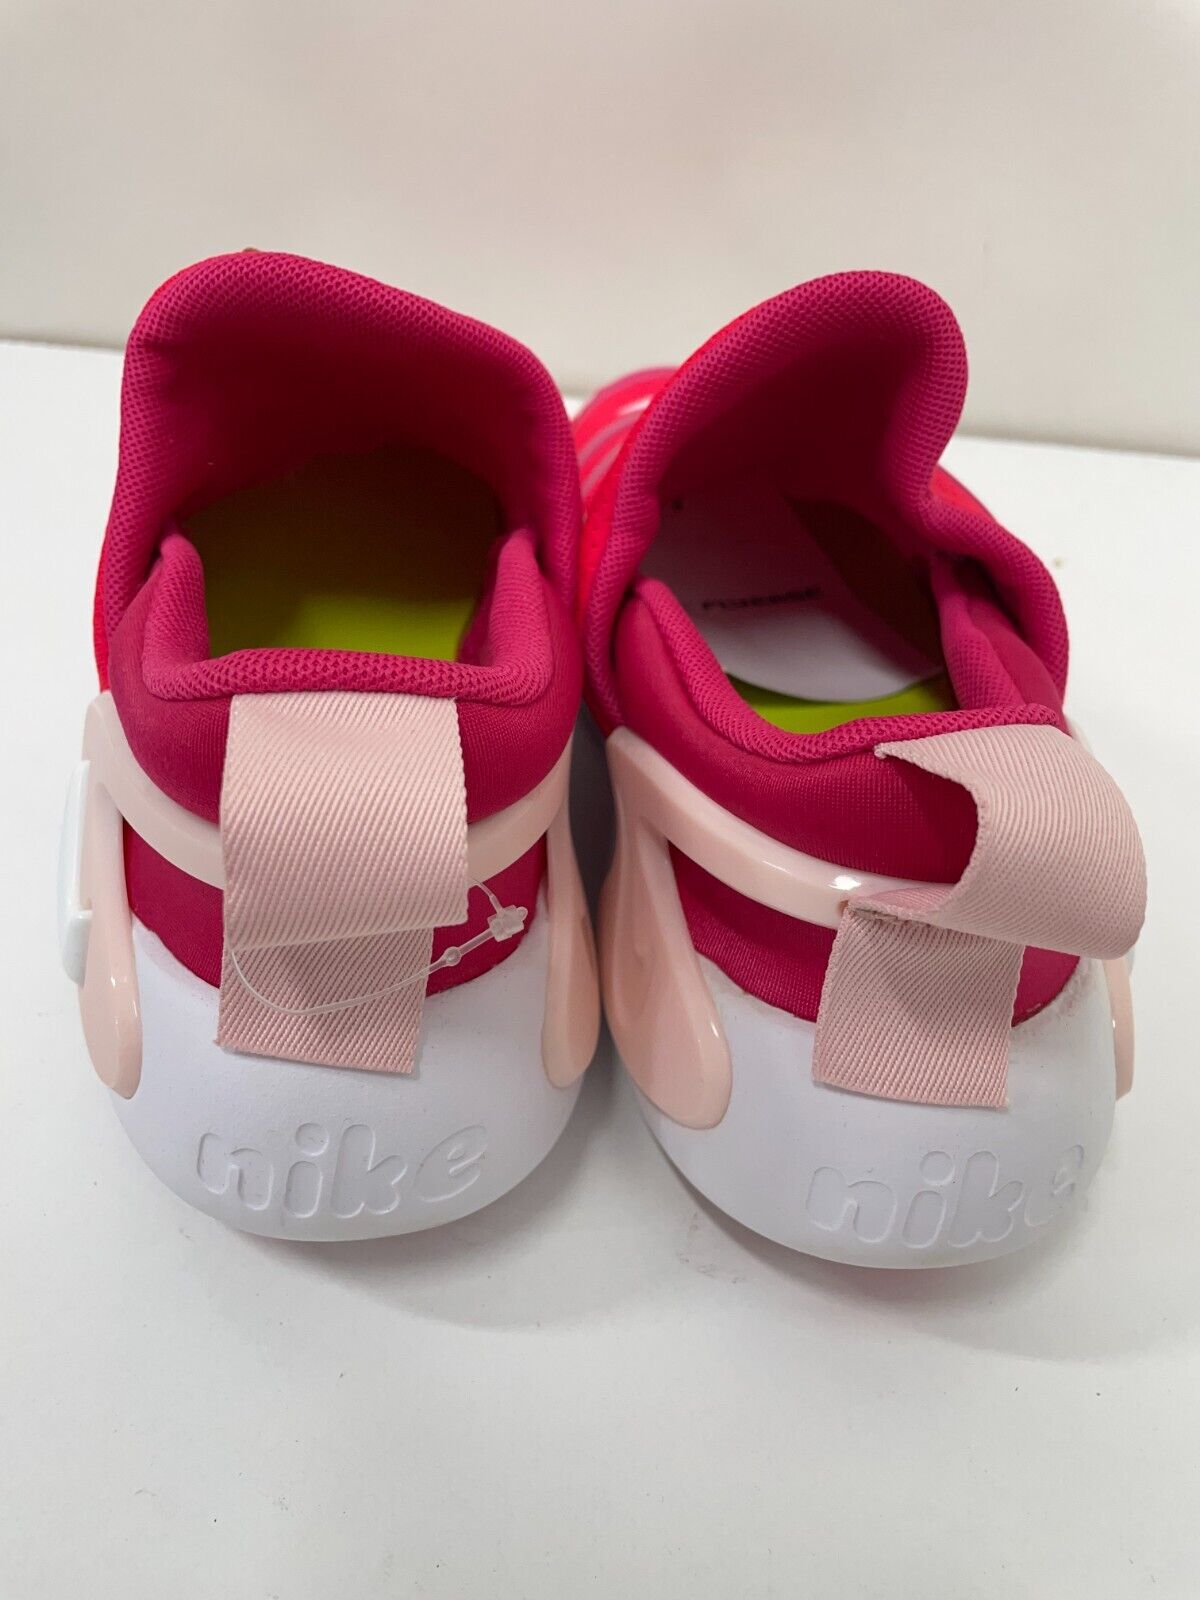 Nike Kids 3Y Dynamo Go Strawberry Sneaker Siren Red/Rush Pink DO9375-600 NWT